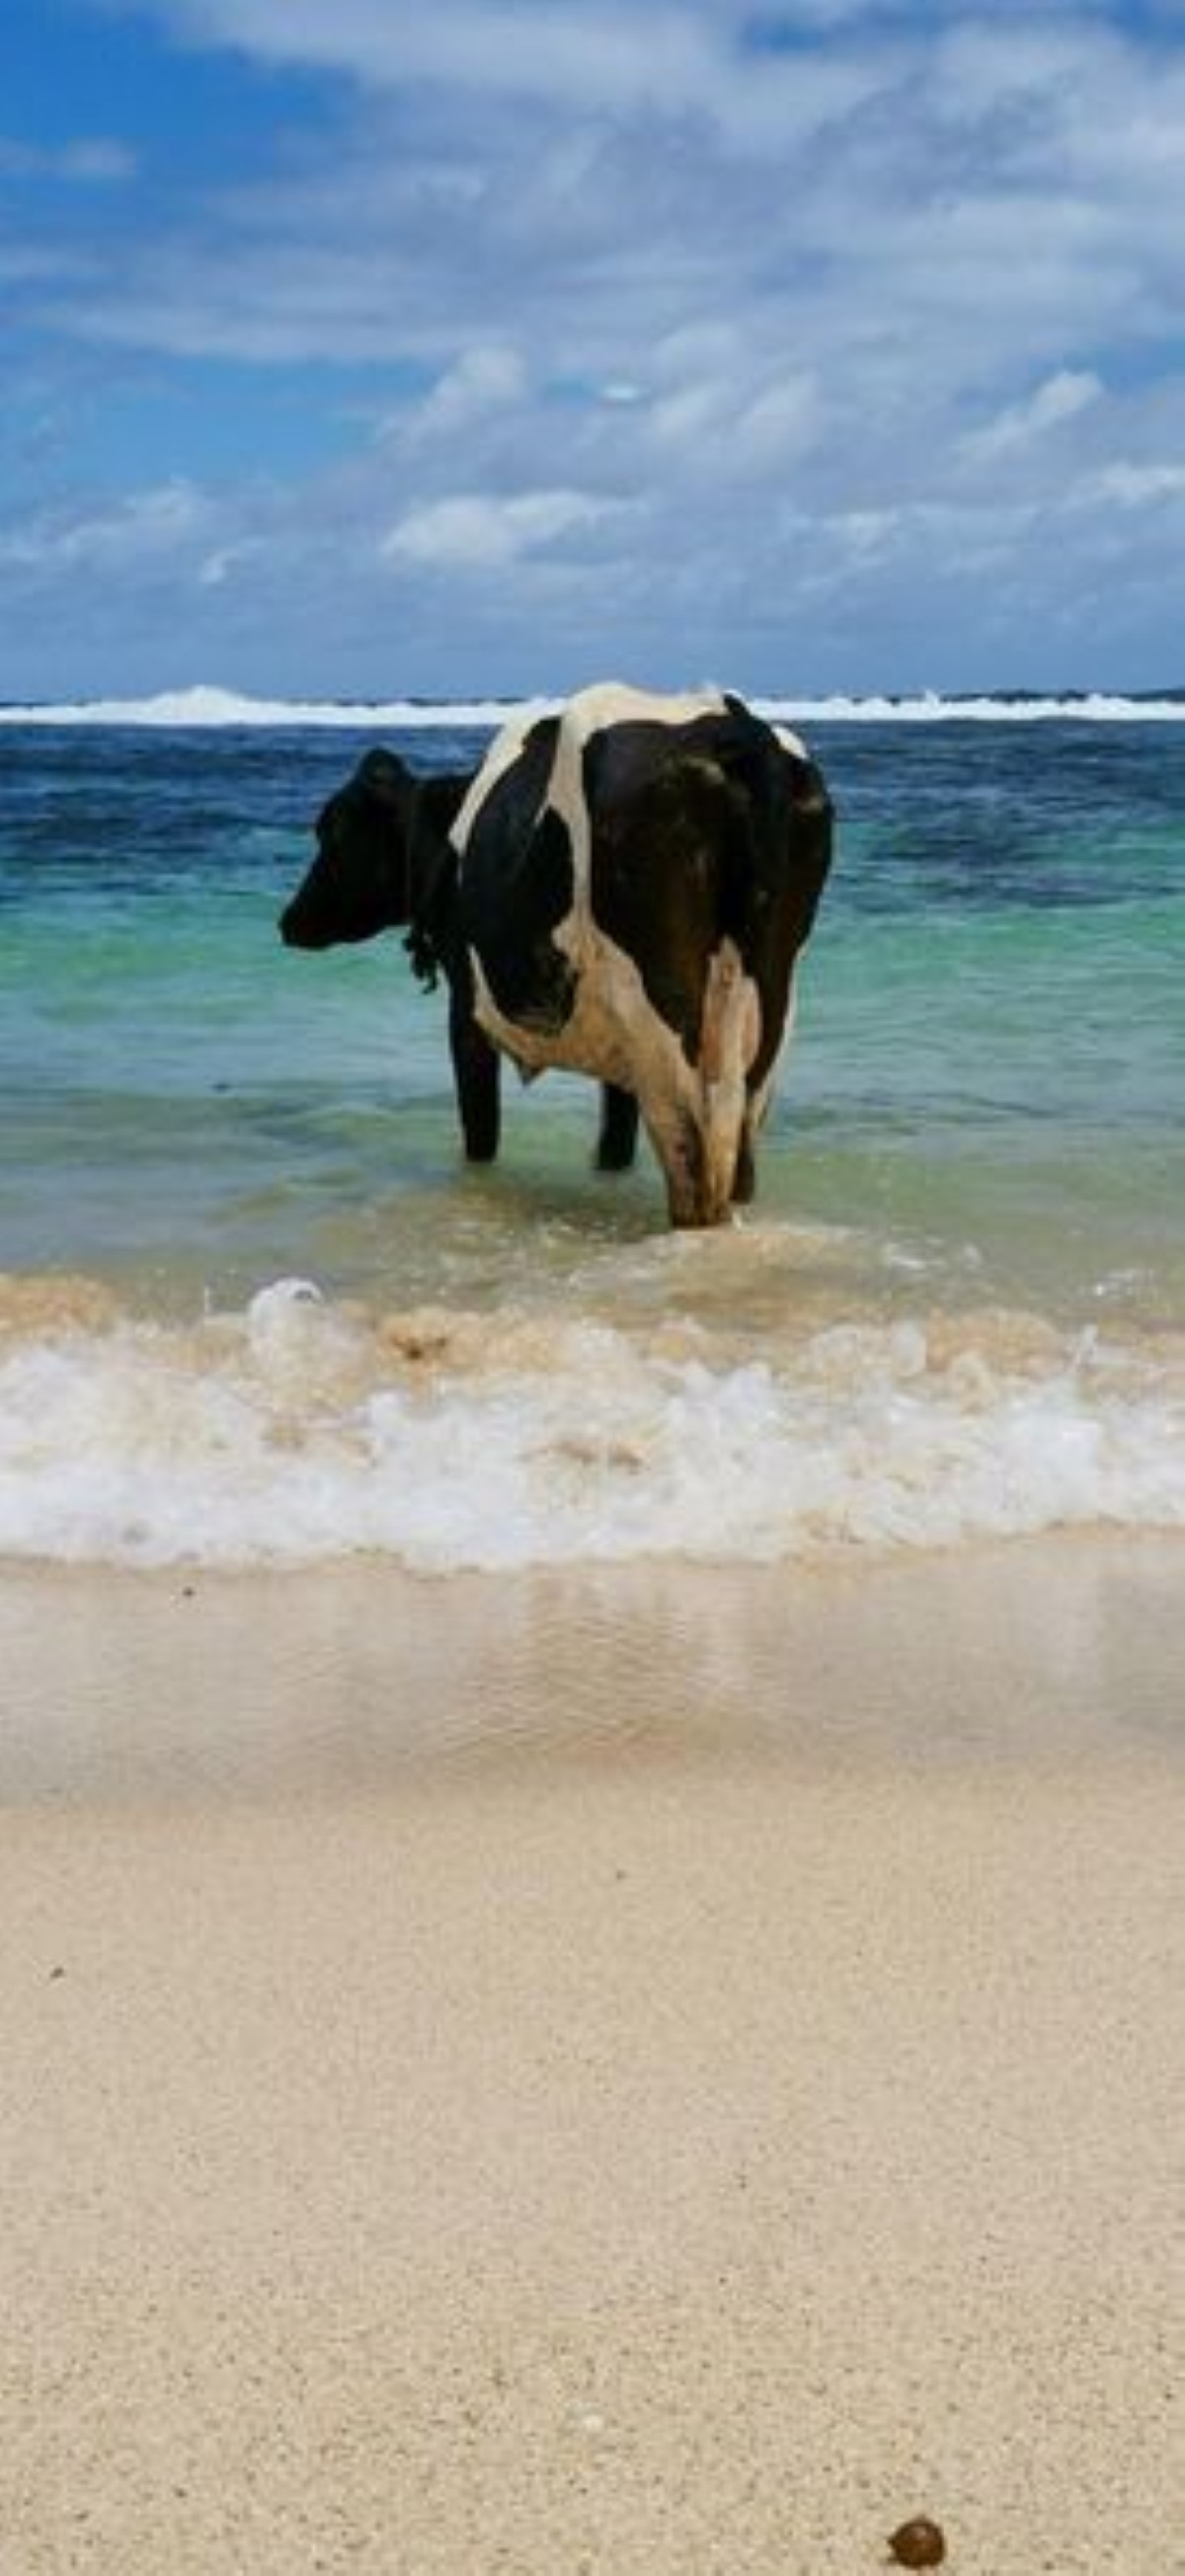 Insolite : promenade d'une vache sur la plage en mode farniente